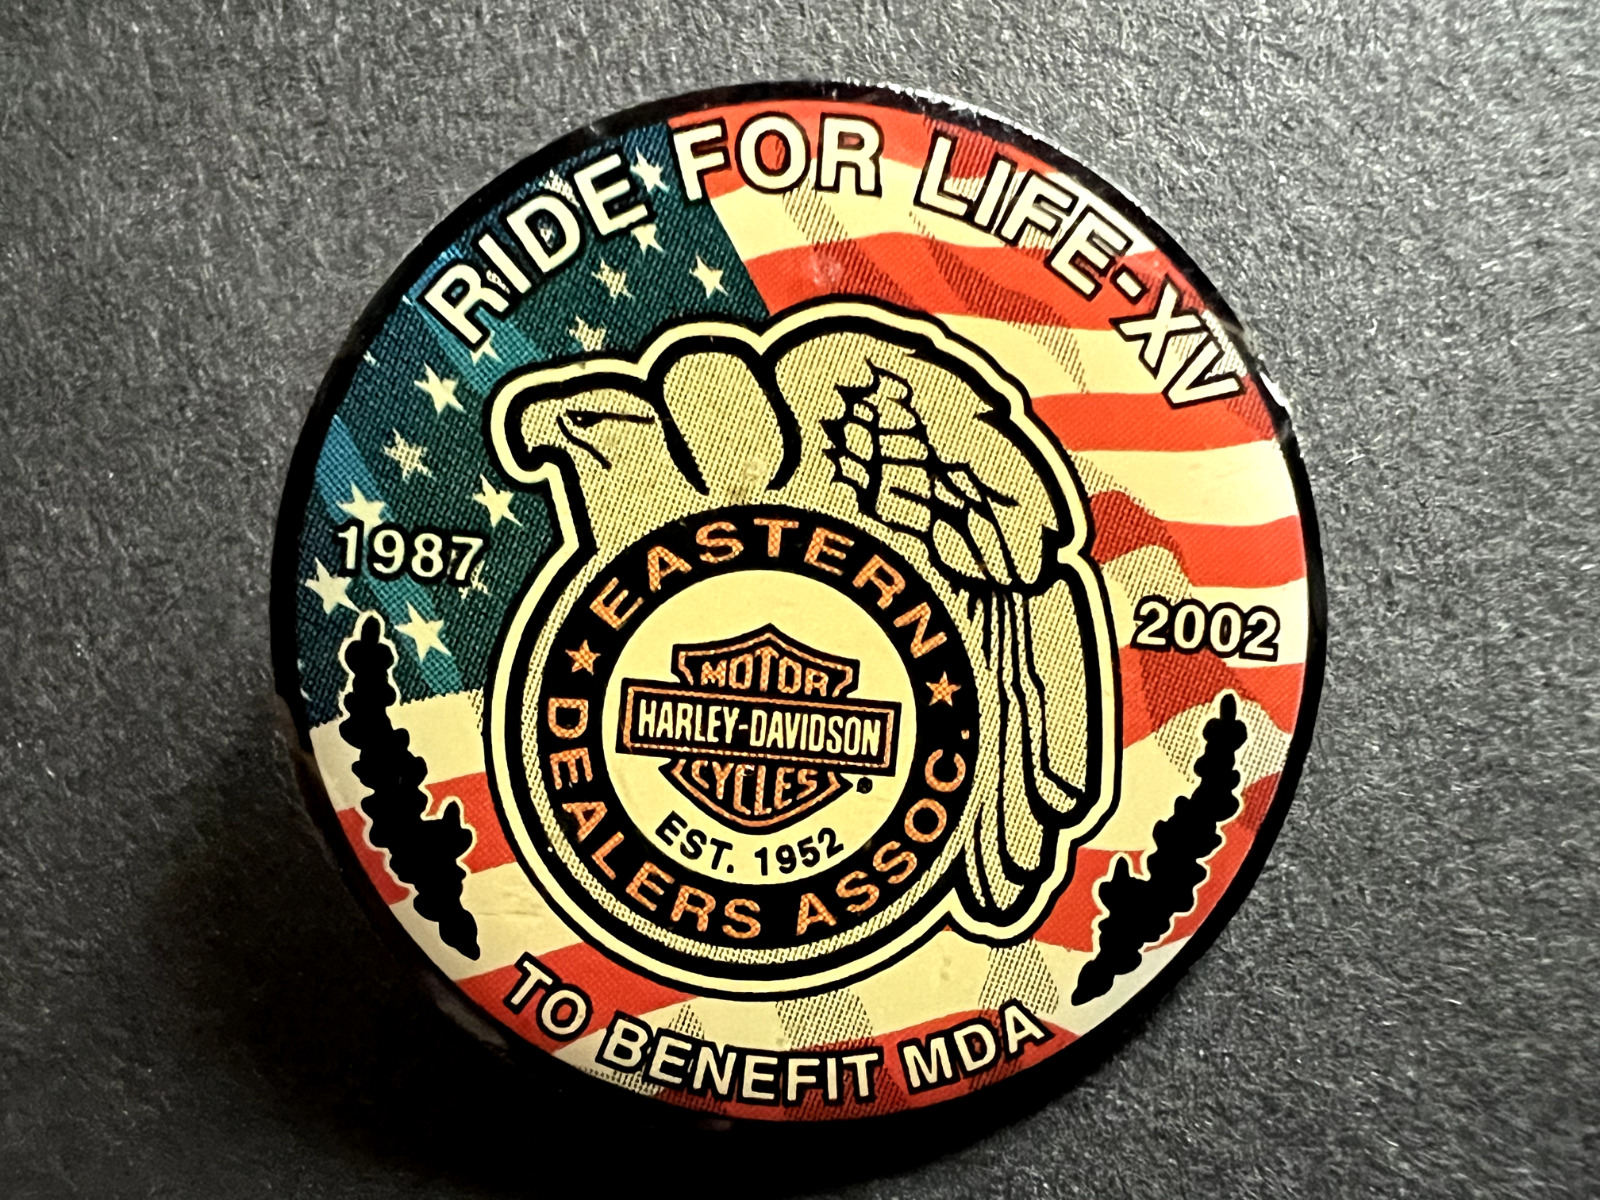 2002 Ride for Life XV Eastern Dealers Harley Davidson Motorcycle Jacket Vest Pin